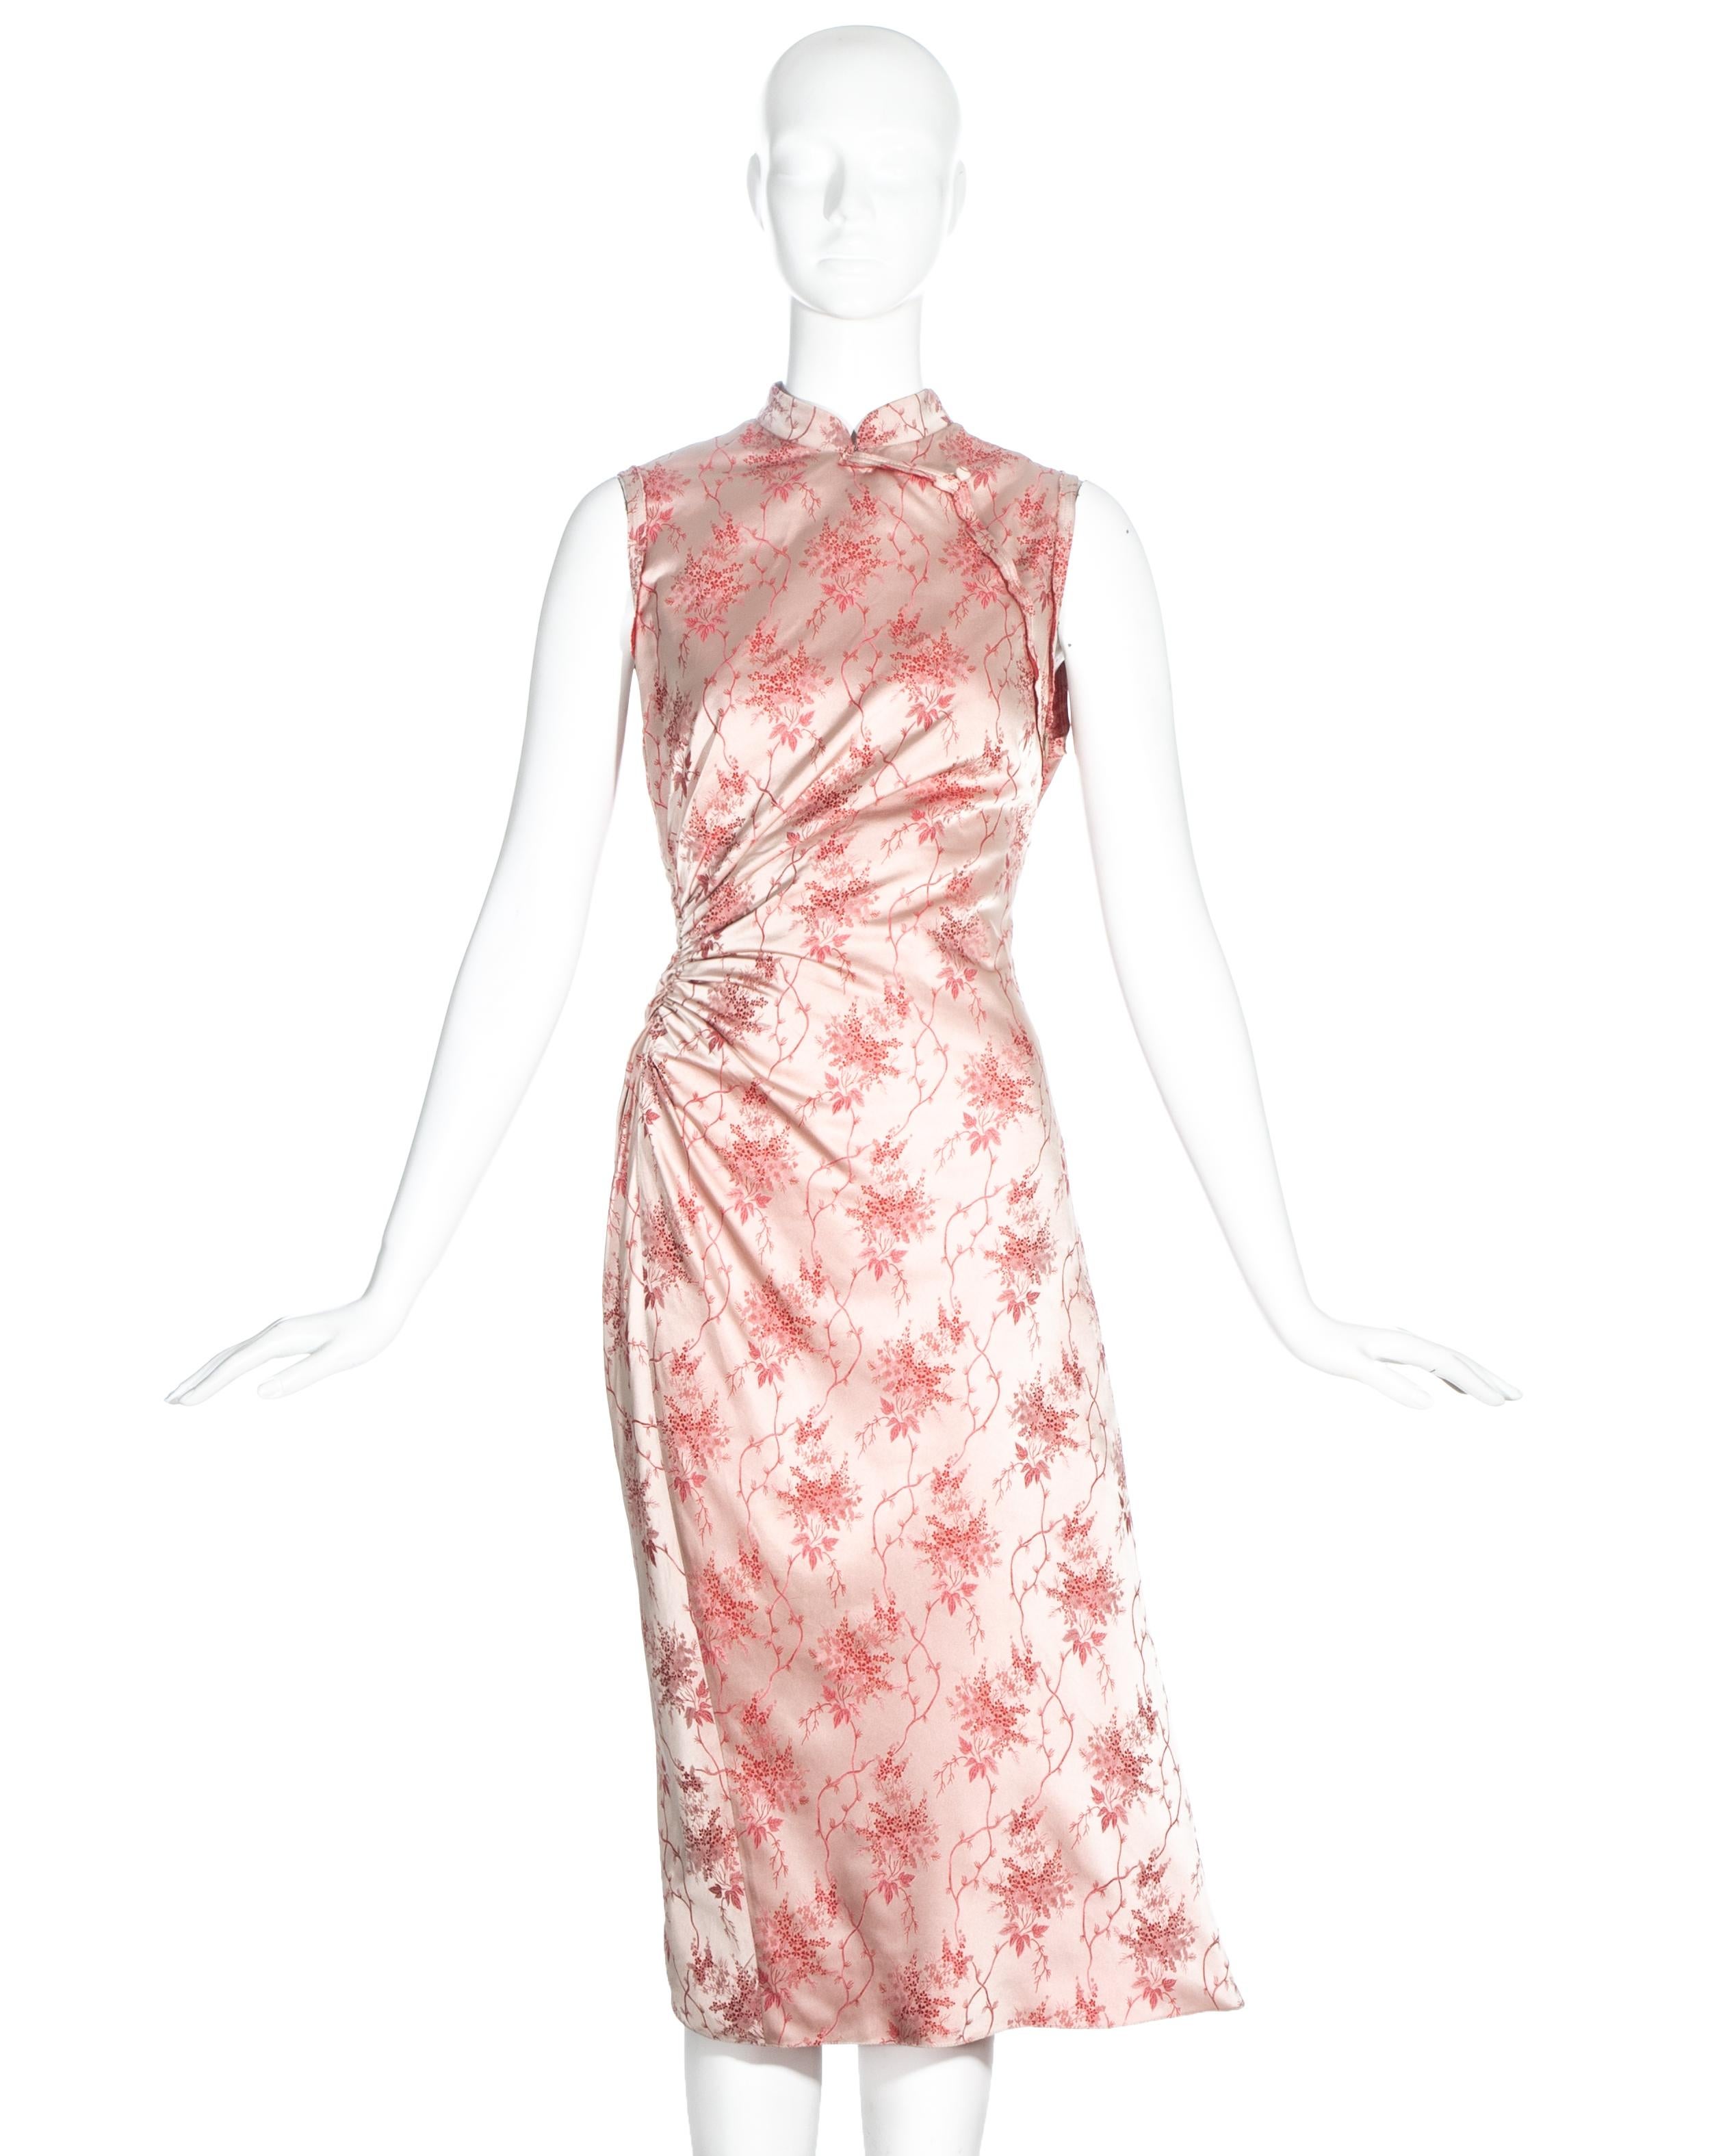 Prada pink silk brocade cheongsam style mid-length dress with ruched seam on waist.

Spring-Summer 2002
